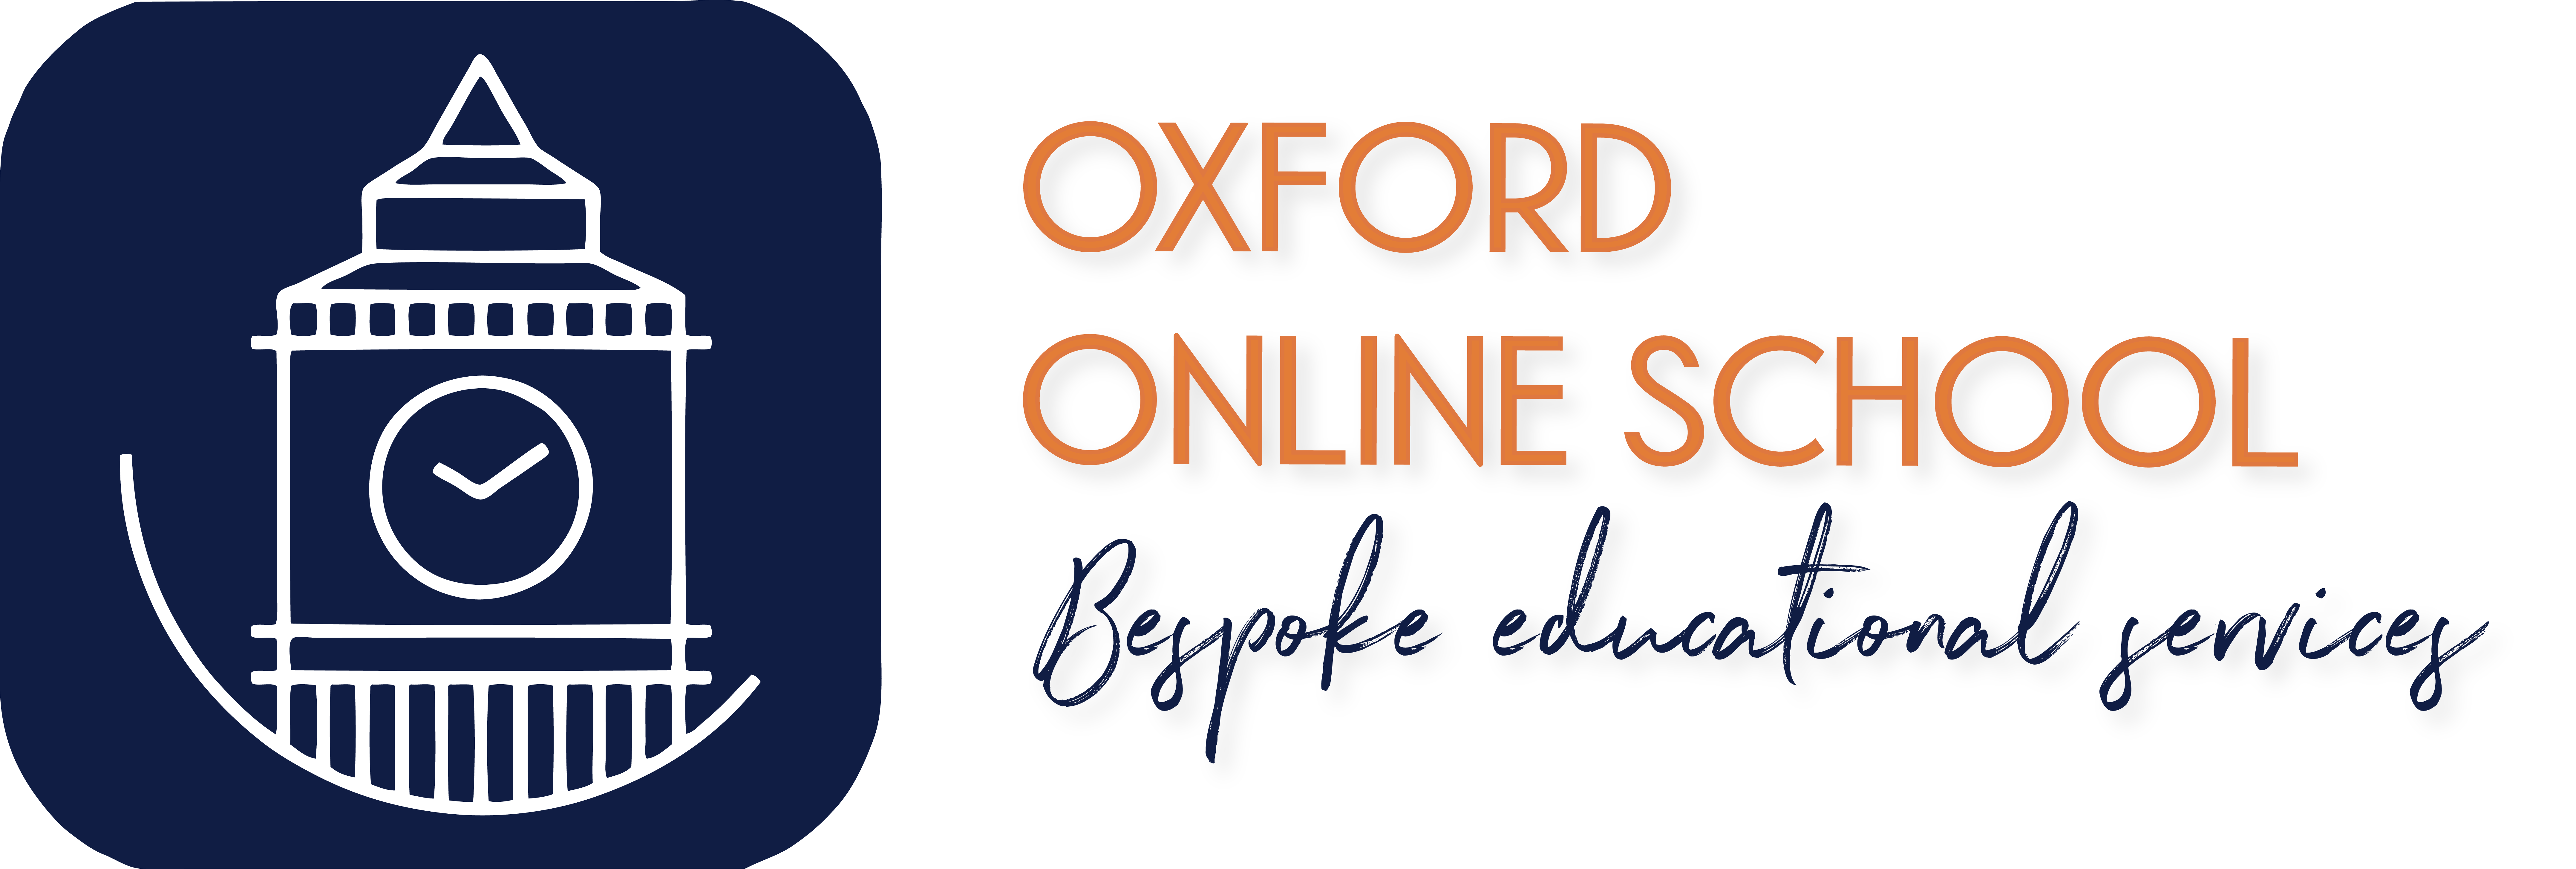 OXFORD ONLINE SCHOOL